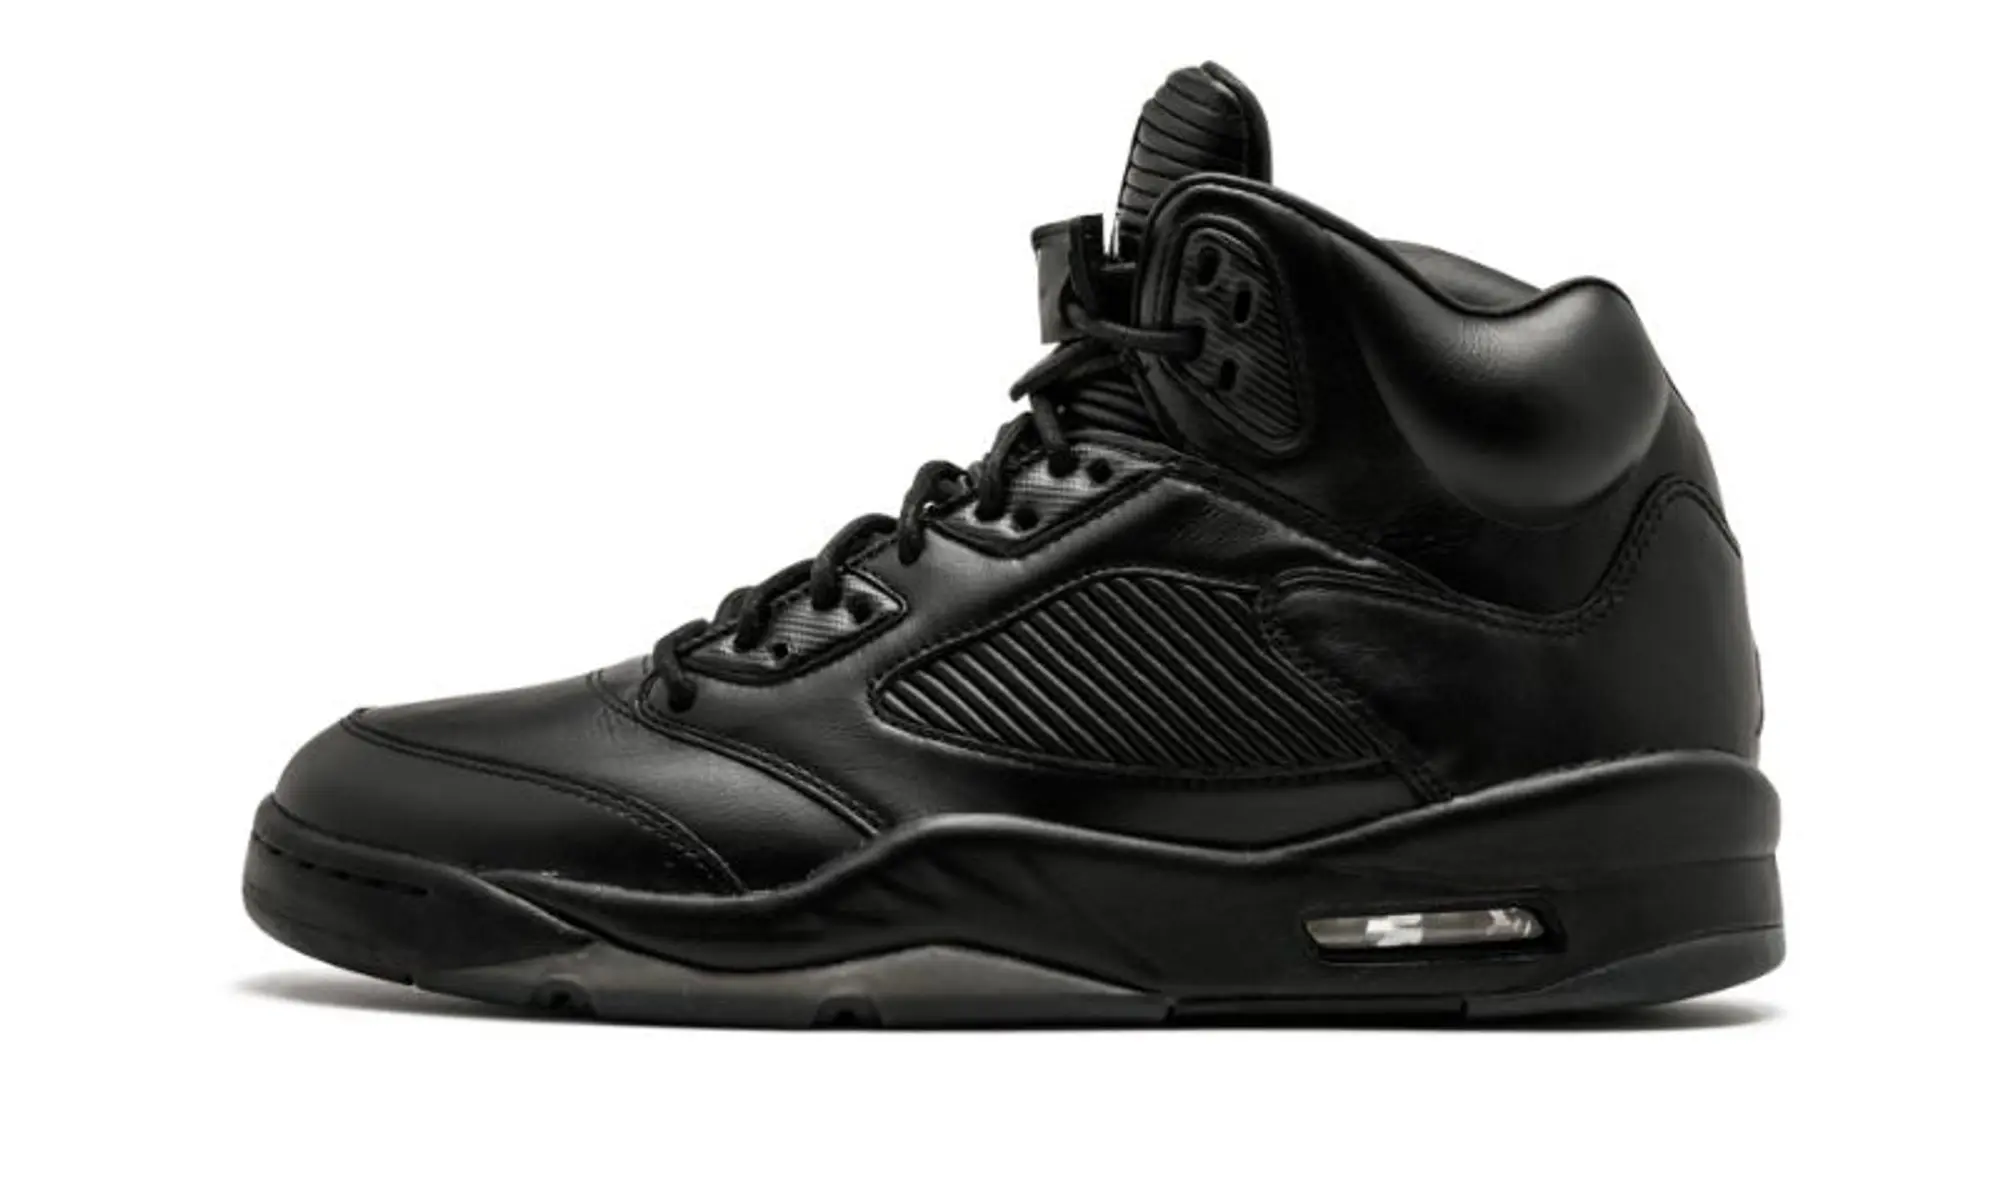 Nike Air Jordan 5 Retro Prem Black Shoes